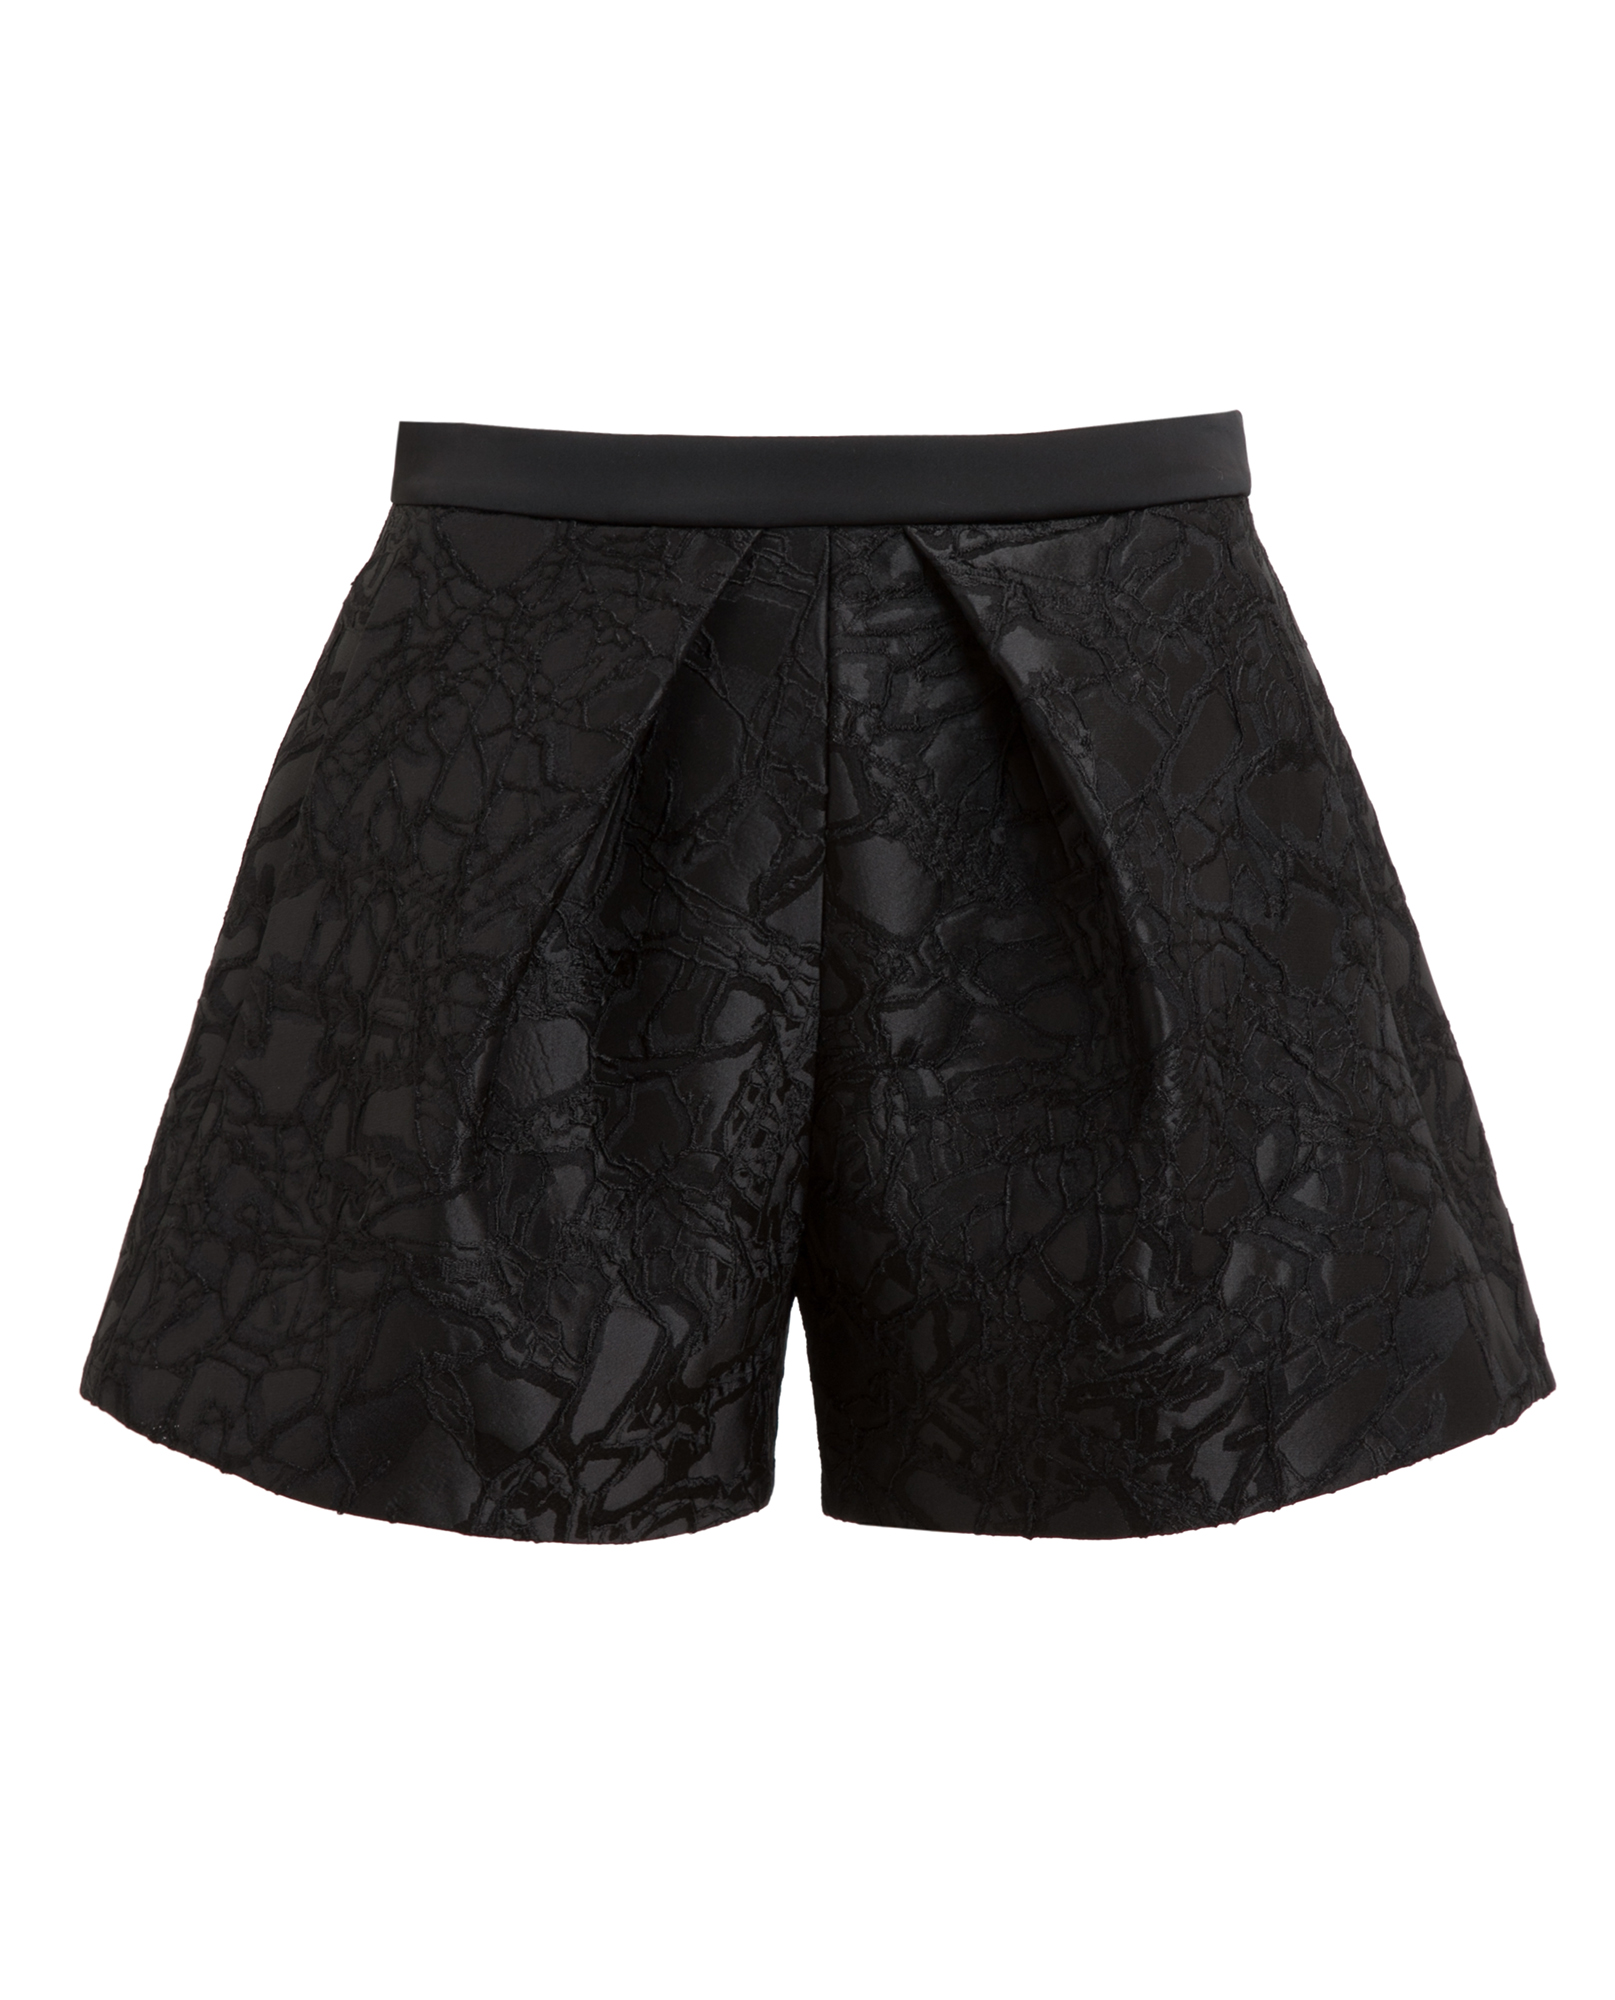 Balenciaga Jacquard Silkblend Shorts in Black | Lyst